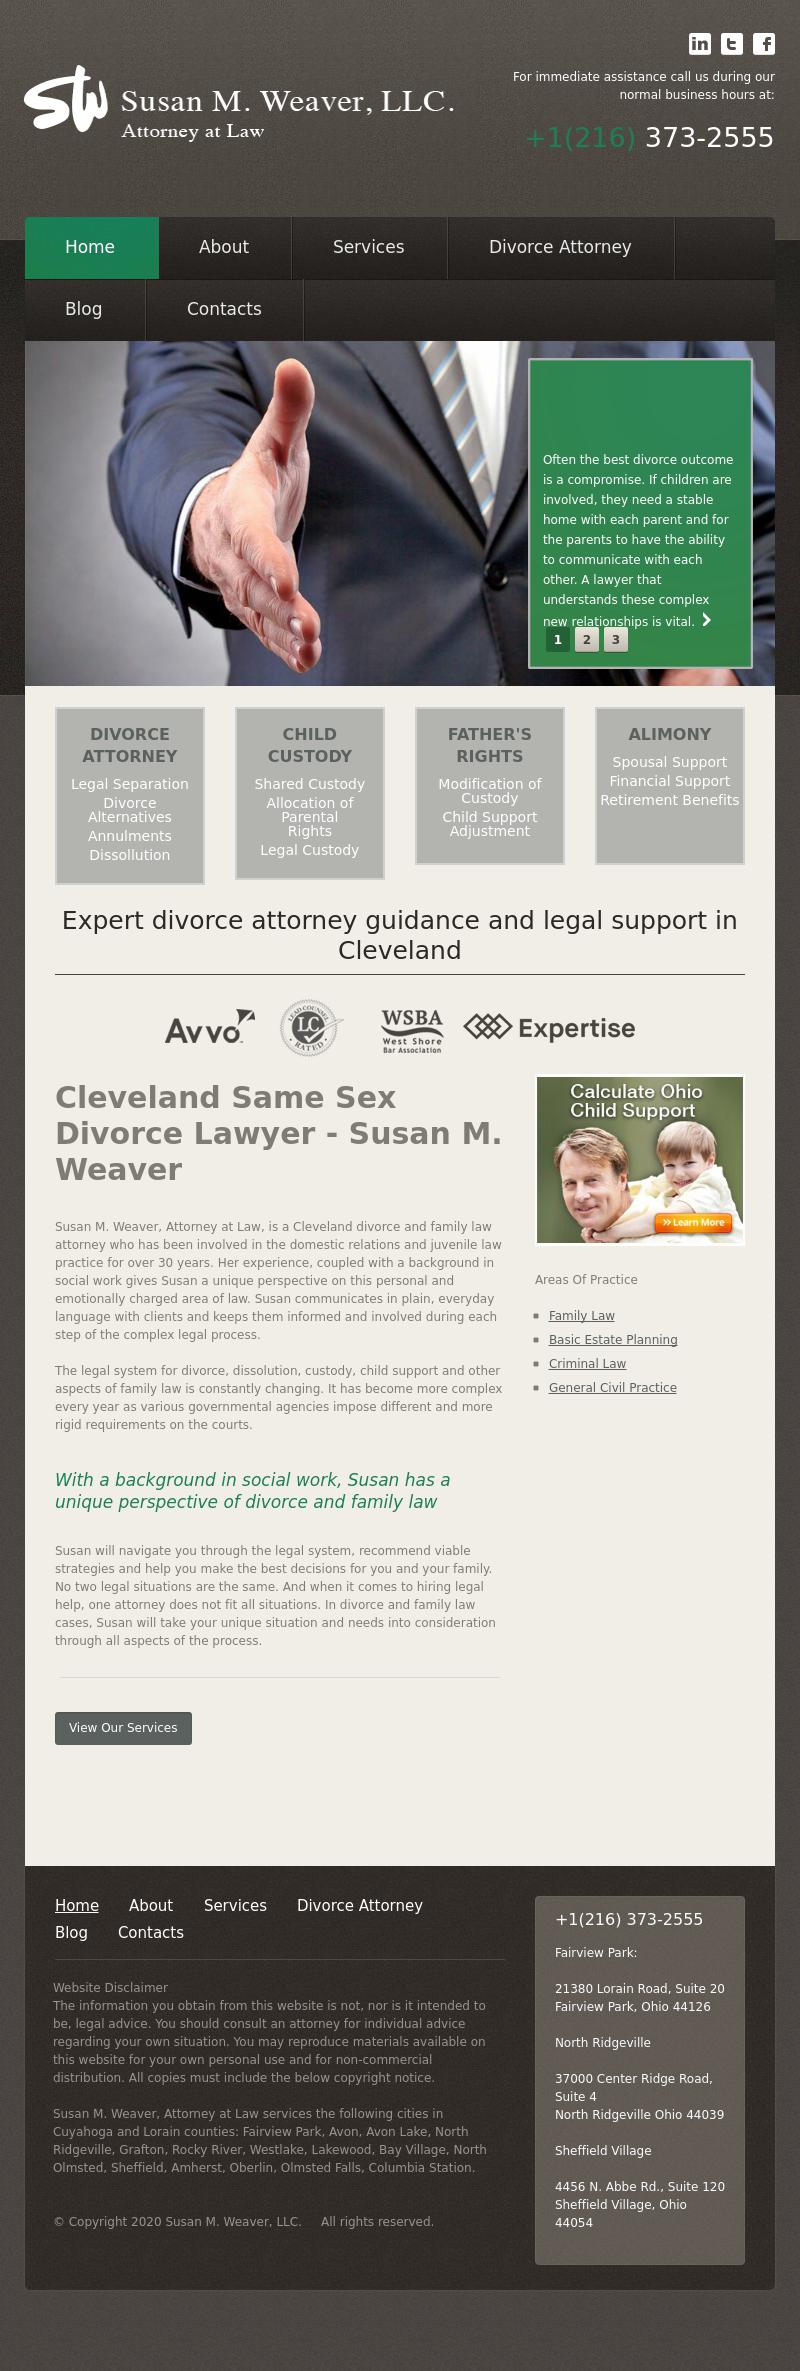 Susan M. Weaver, LLC - Sheffield Village OH Lawyers